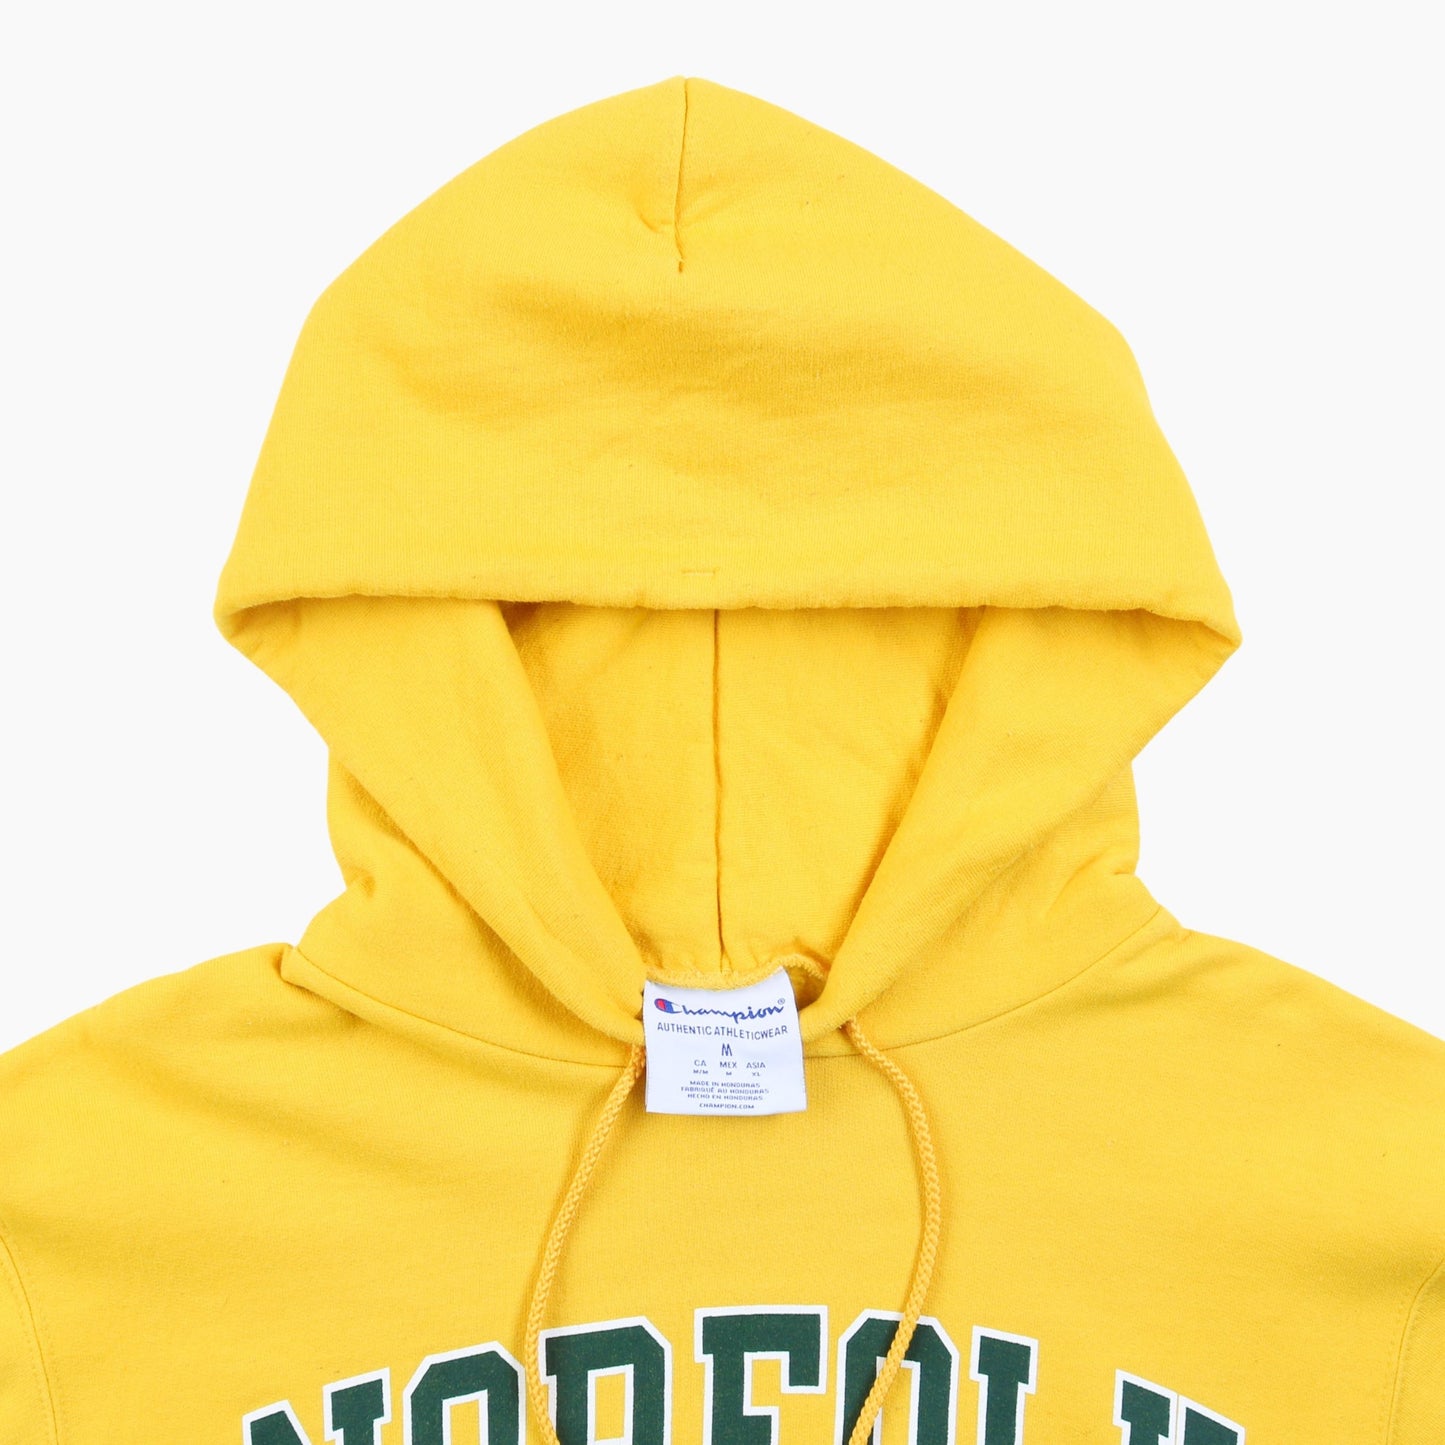 'NORFOLK STATE' Champion Hooded Sweatshirt - American Madness